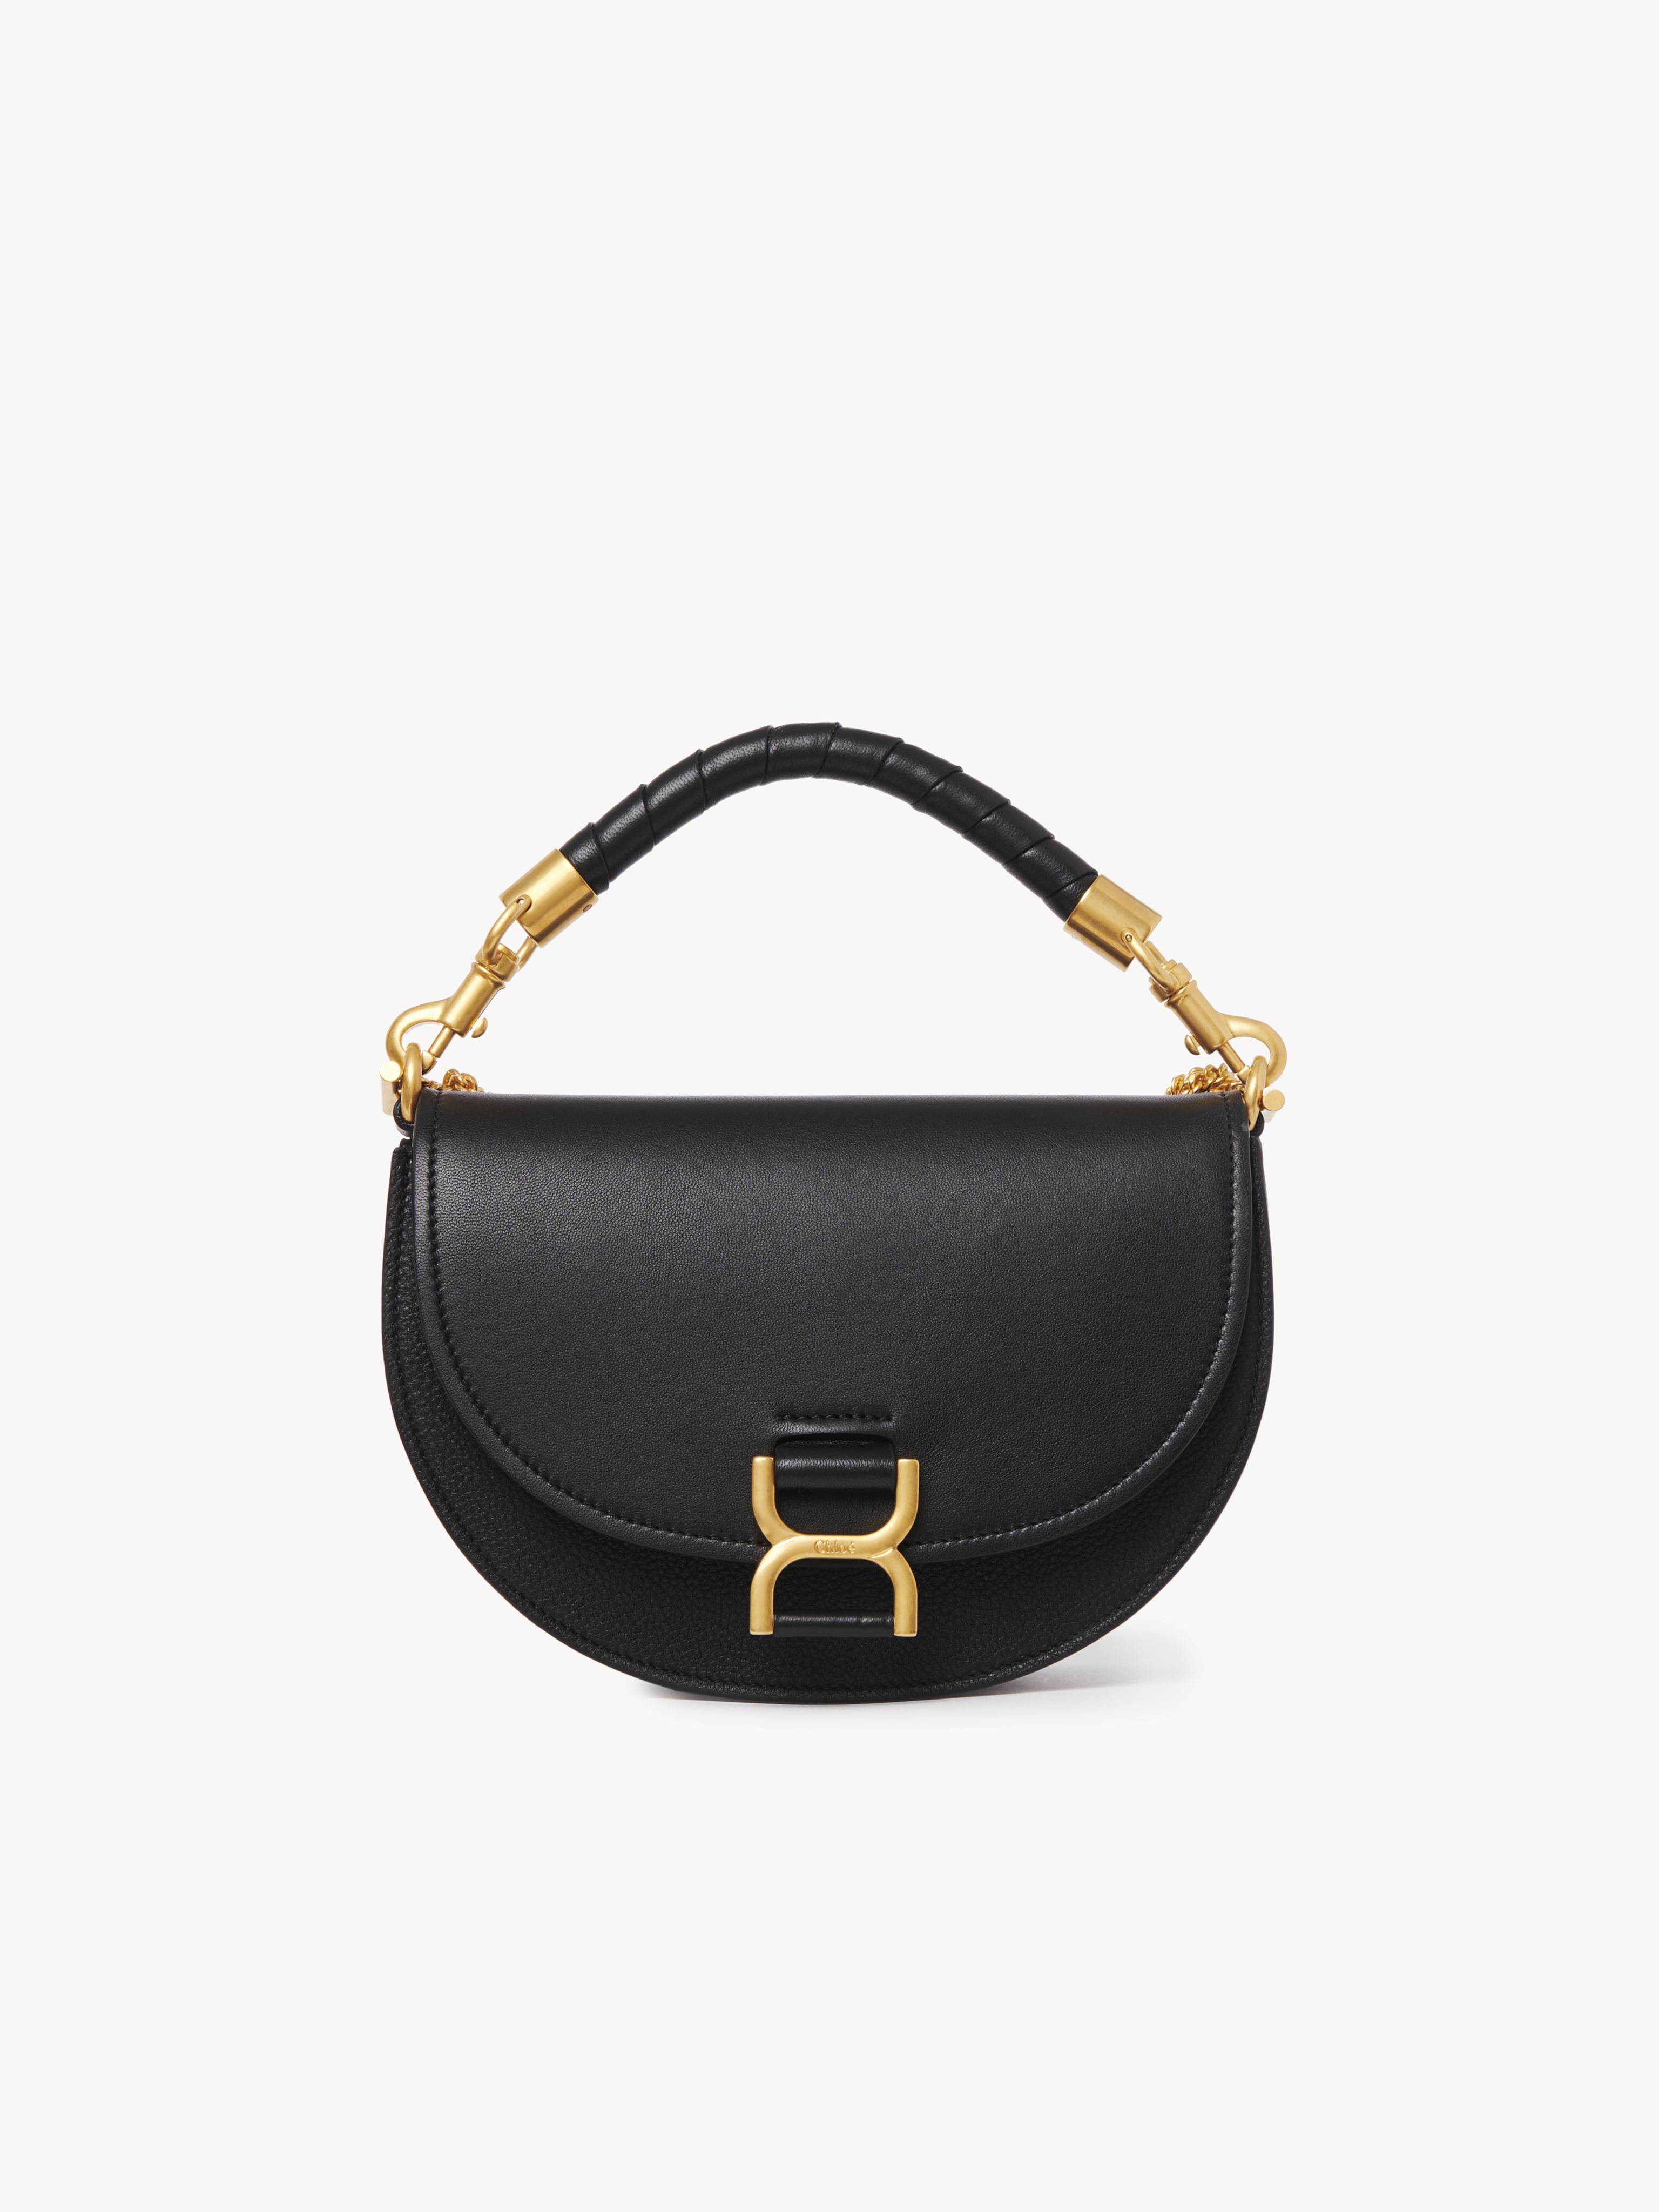 Chloé Marcie Chain Flap Bag Black Size Onesize 100% Calf-skin